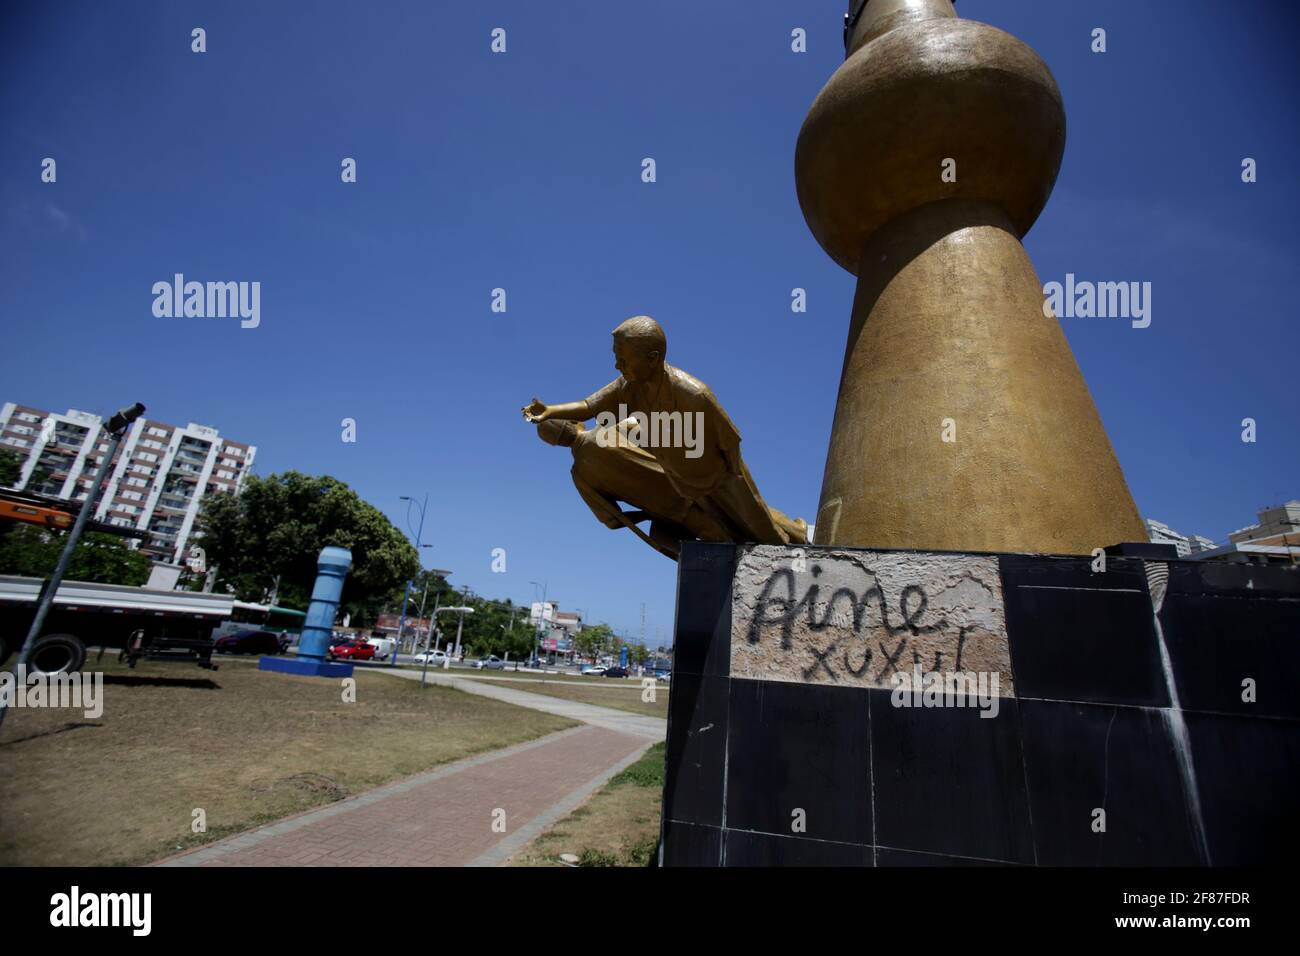 salvador, bahia / brazil - november 19, 2018: Statue of Jorge Amado and Zelia Gattai is seen tumbled due to vandelism in the neighborhood of Imbui in Stock Photo